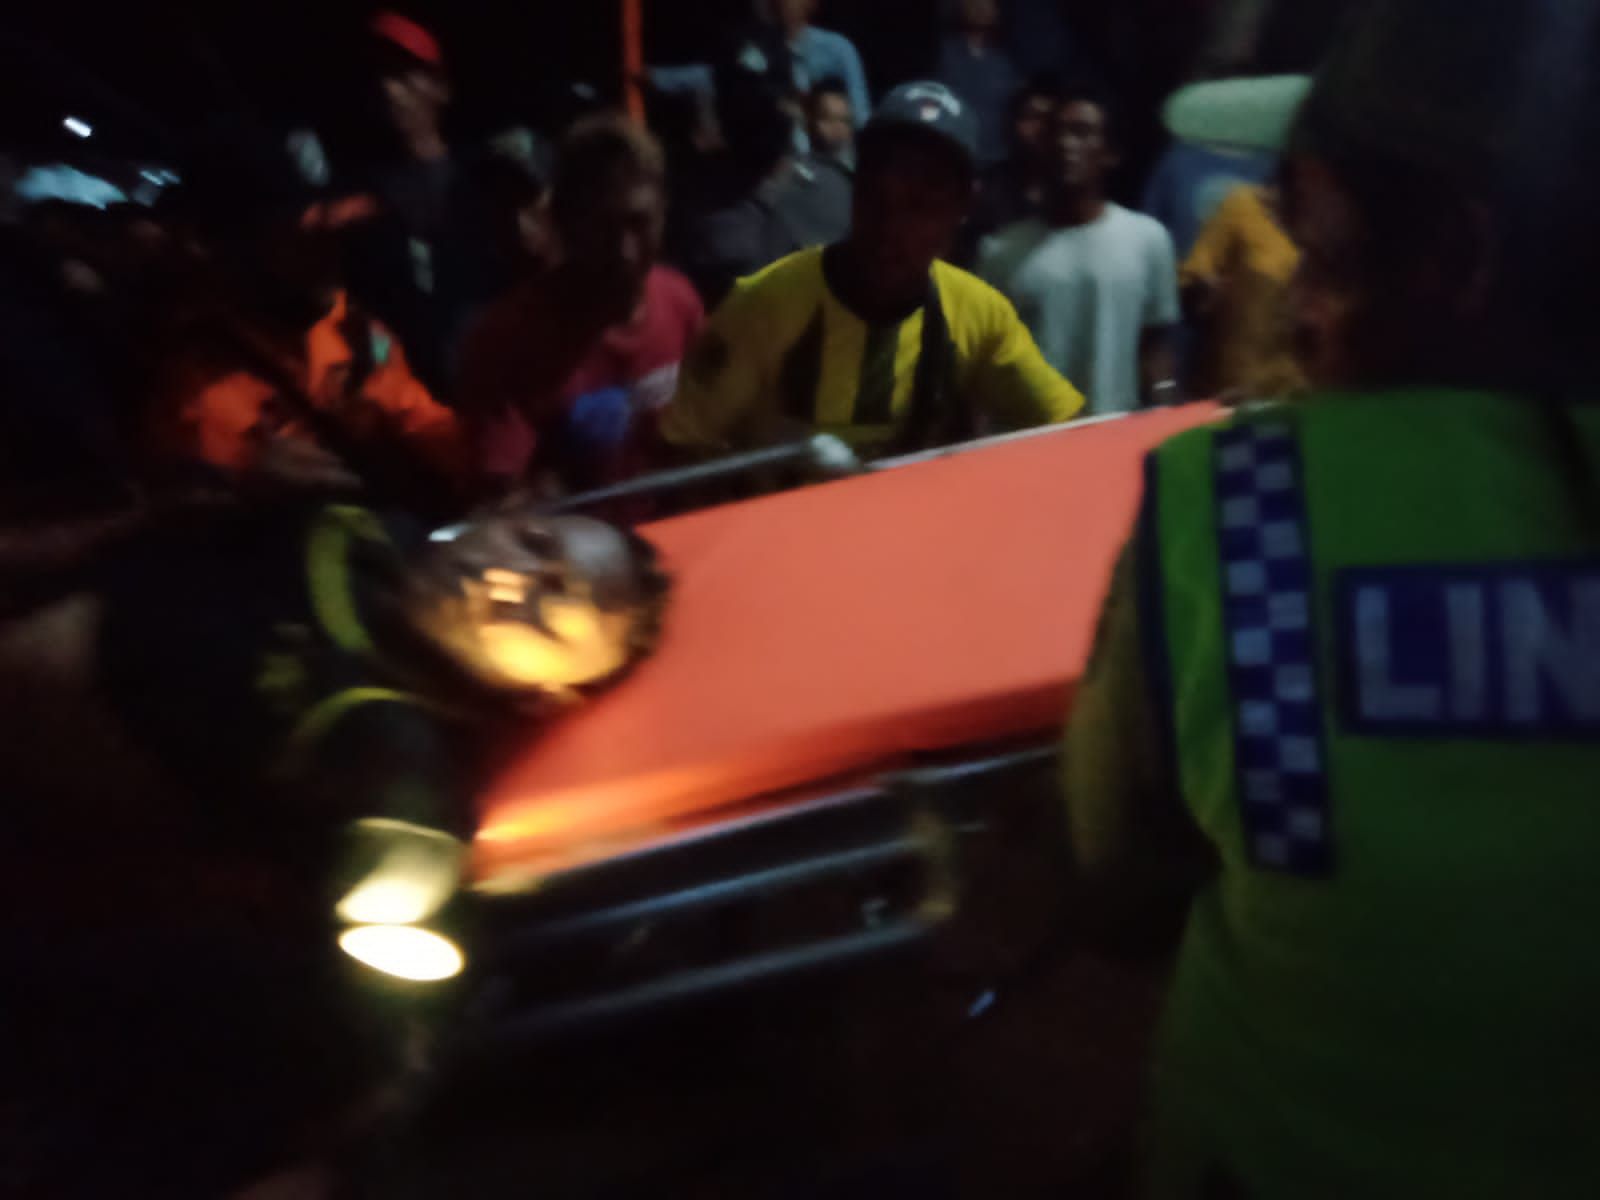 Basarnas Kantor Pencarian dan Pertolongan Cilacap berhasil evakuasi korban yang diduga tenggelam akibat kecelakaan kapal di Sungai Tipar Karangbenda, Adipala, Cilacap, hari Minggu 12 Desember 2021. / Istimewa